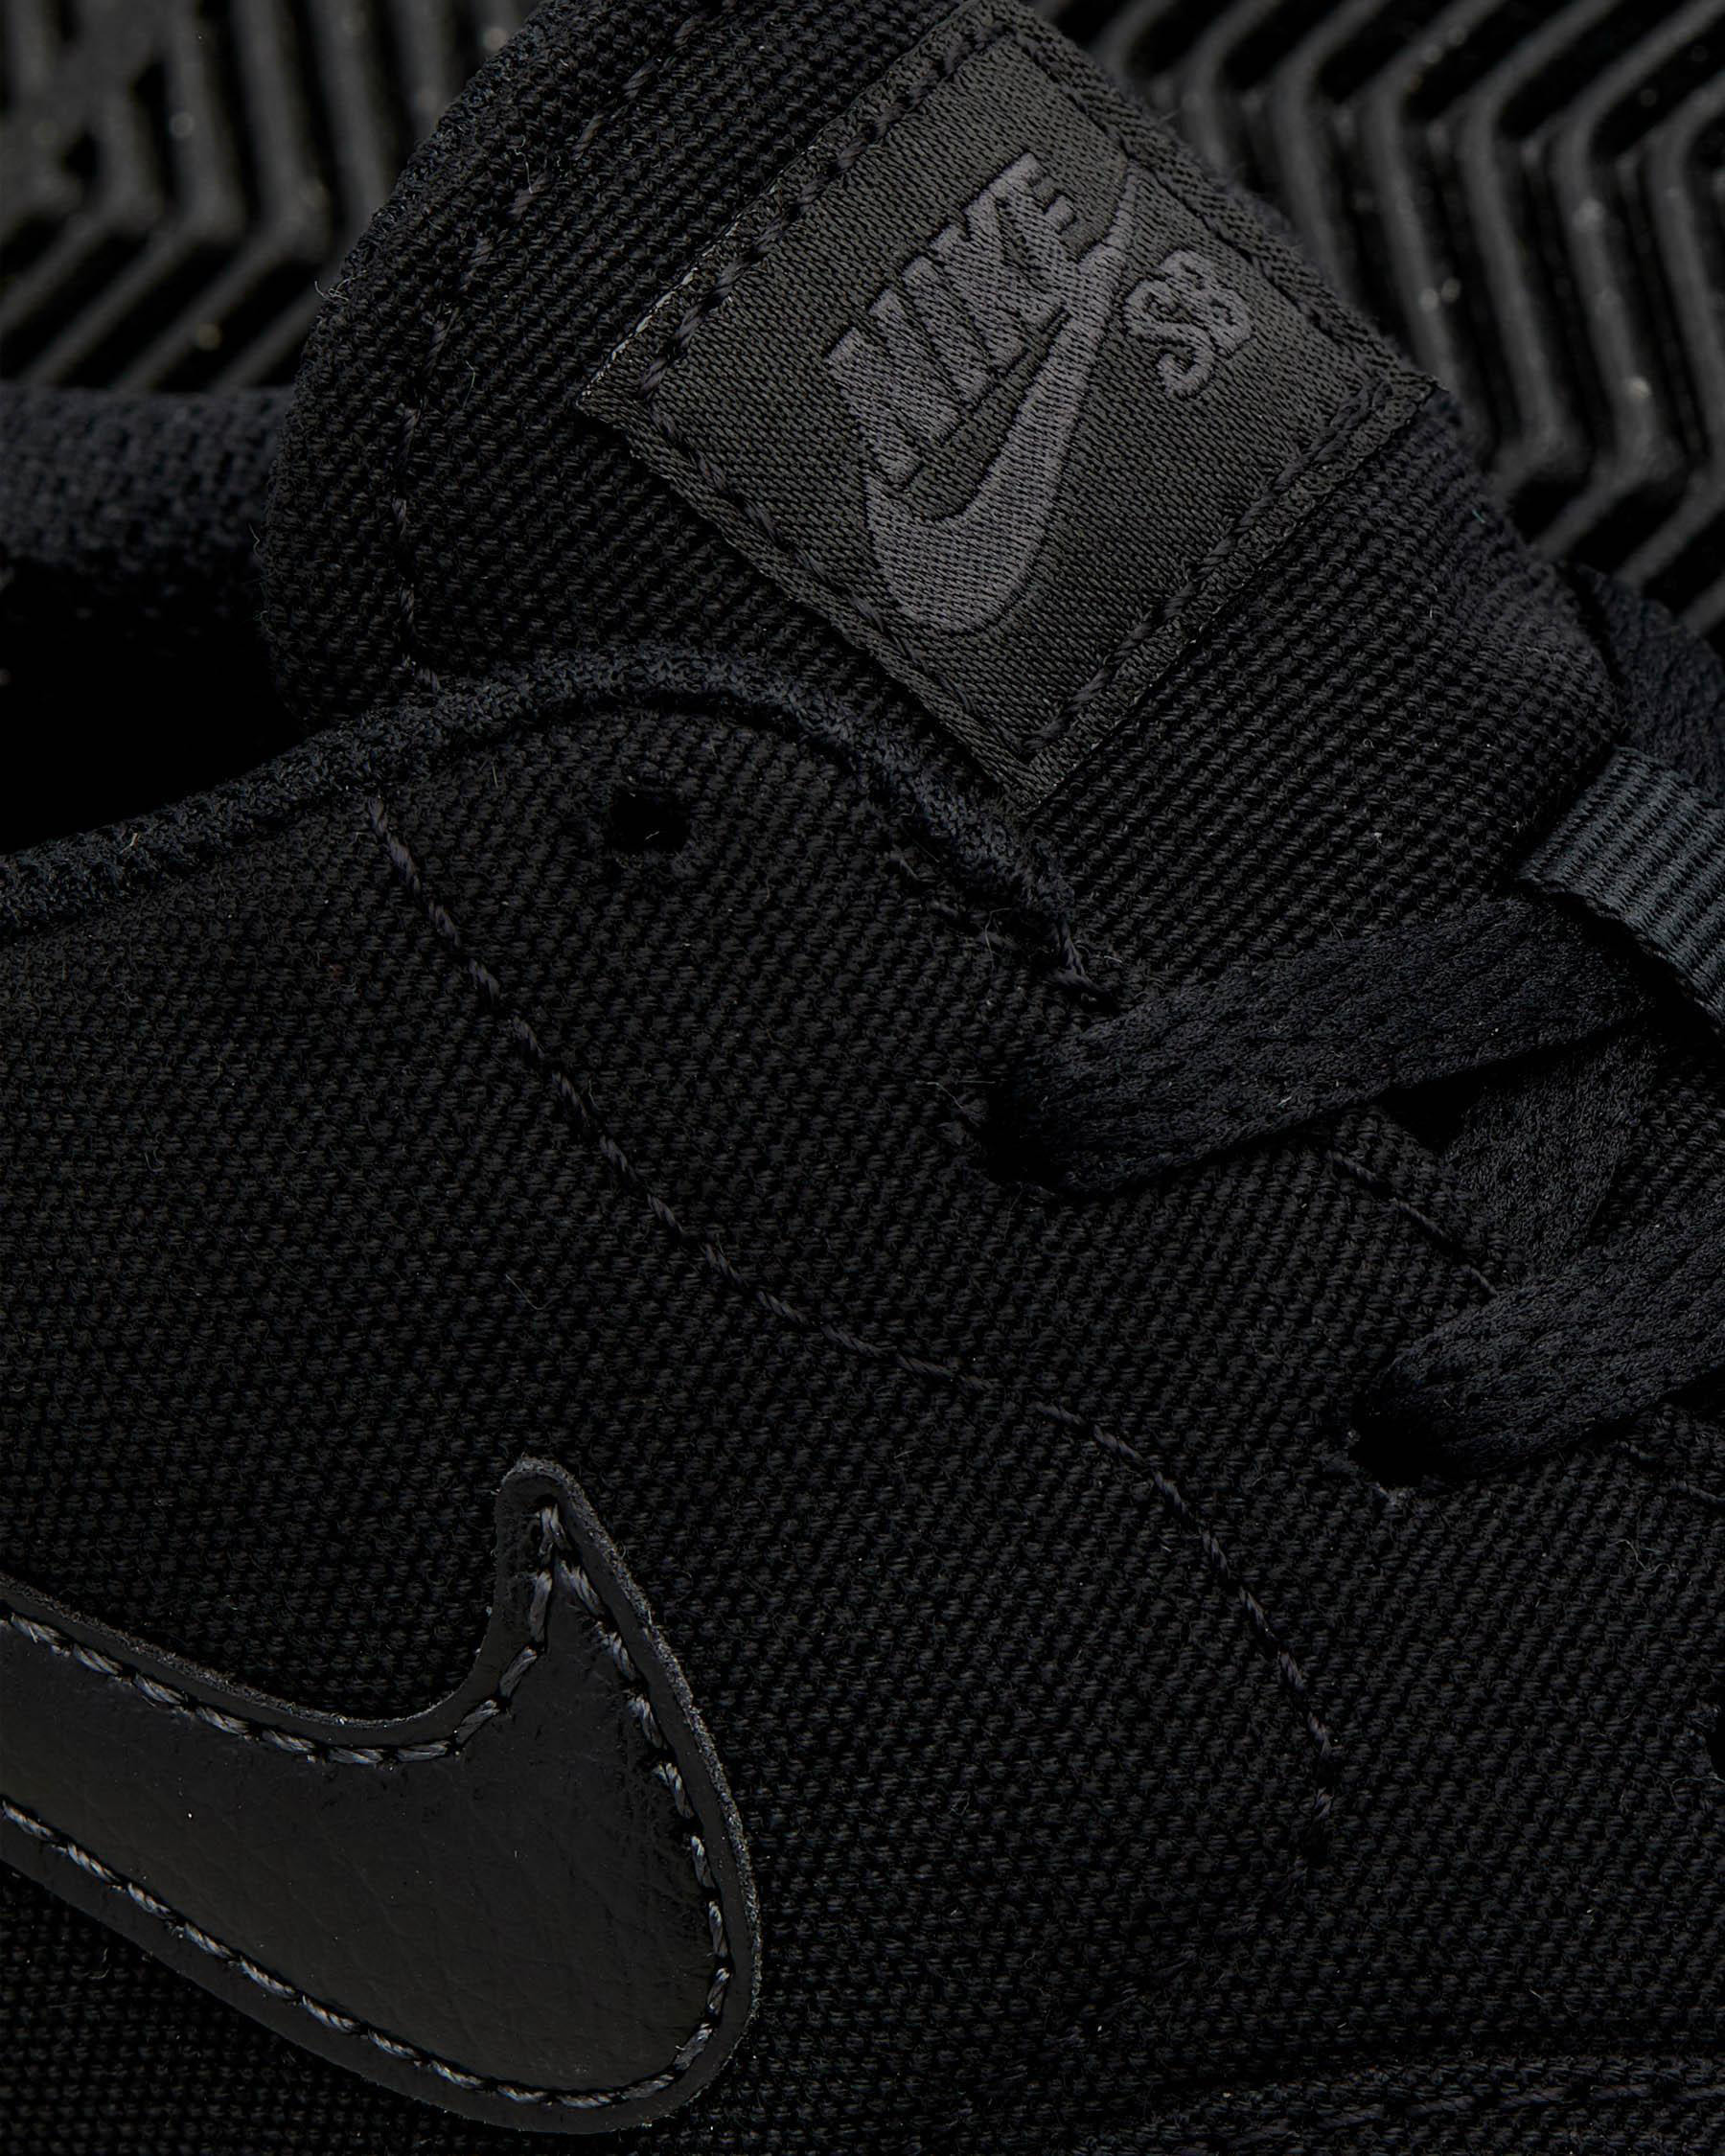 Shop Nike Boys' Sb Check Shoes In Black/black-gum - Fast Shipping ...